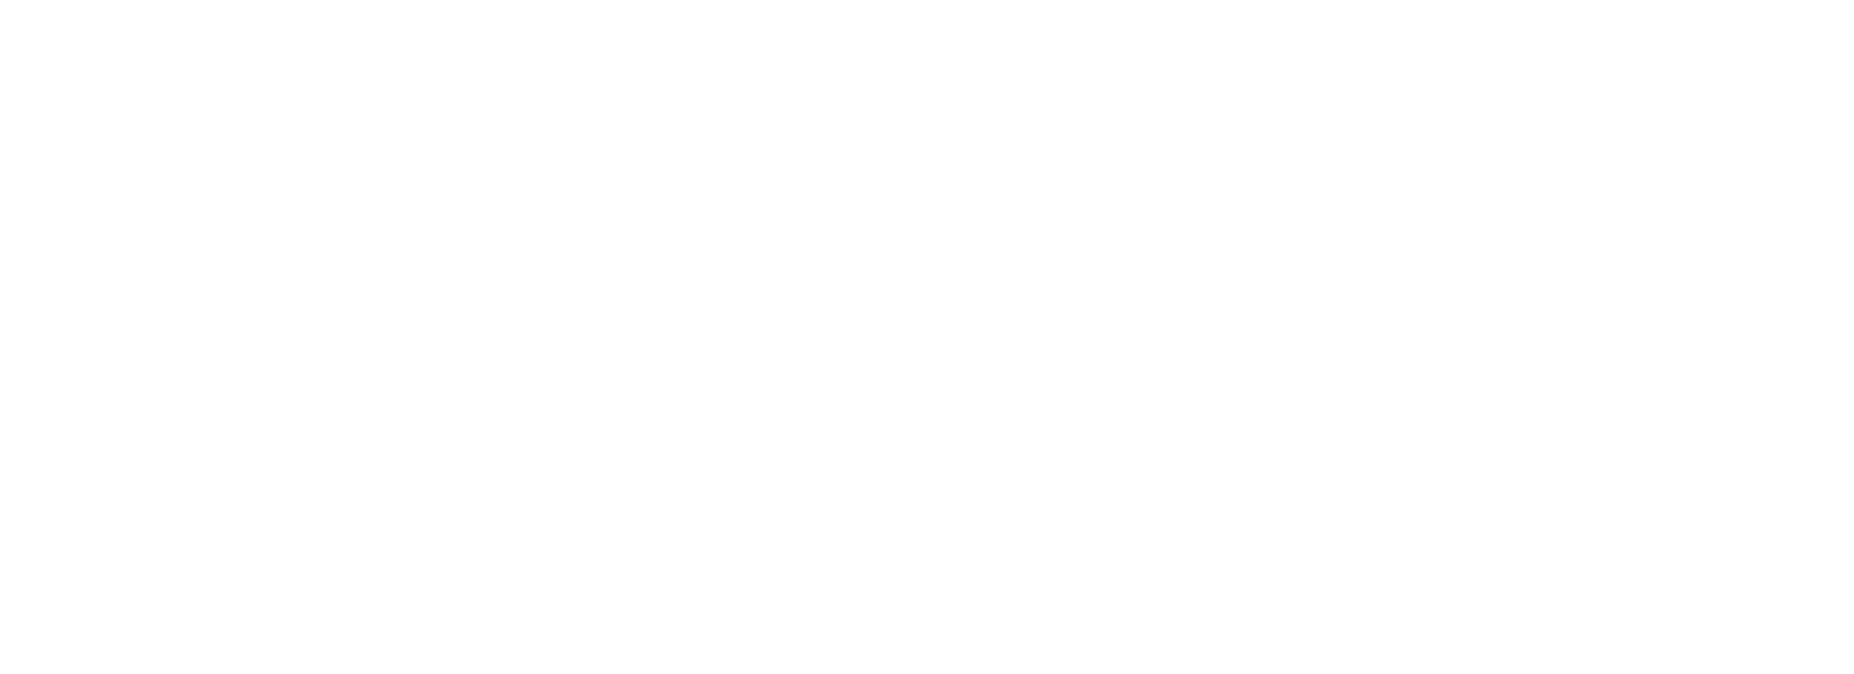 Kellie Snow Creations Logo